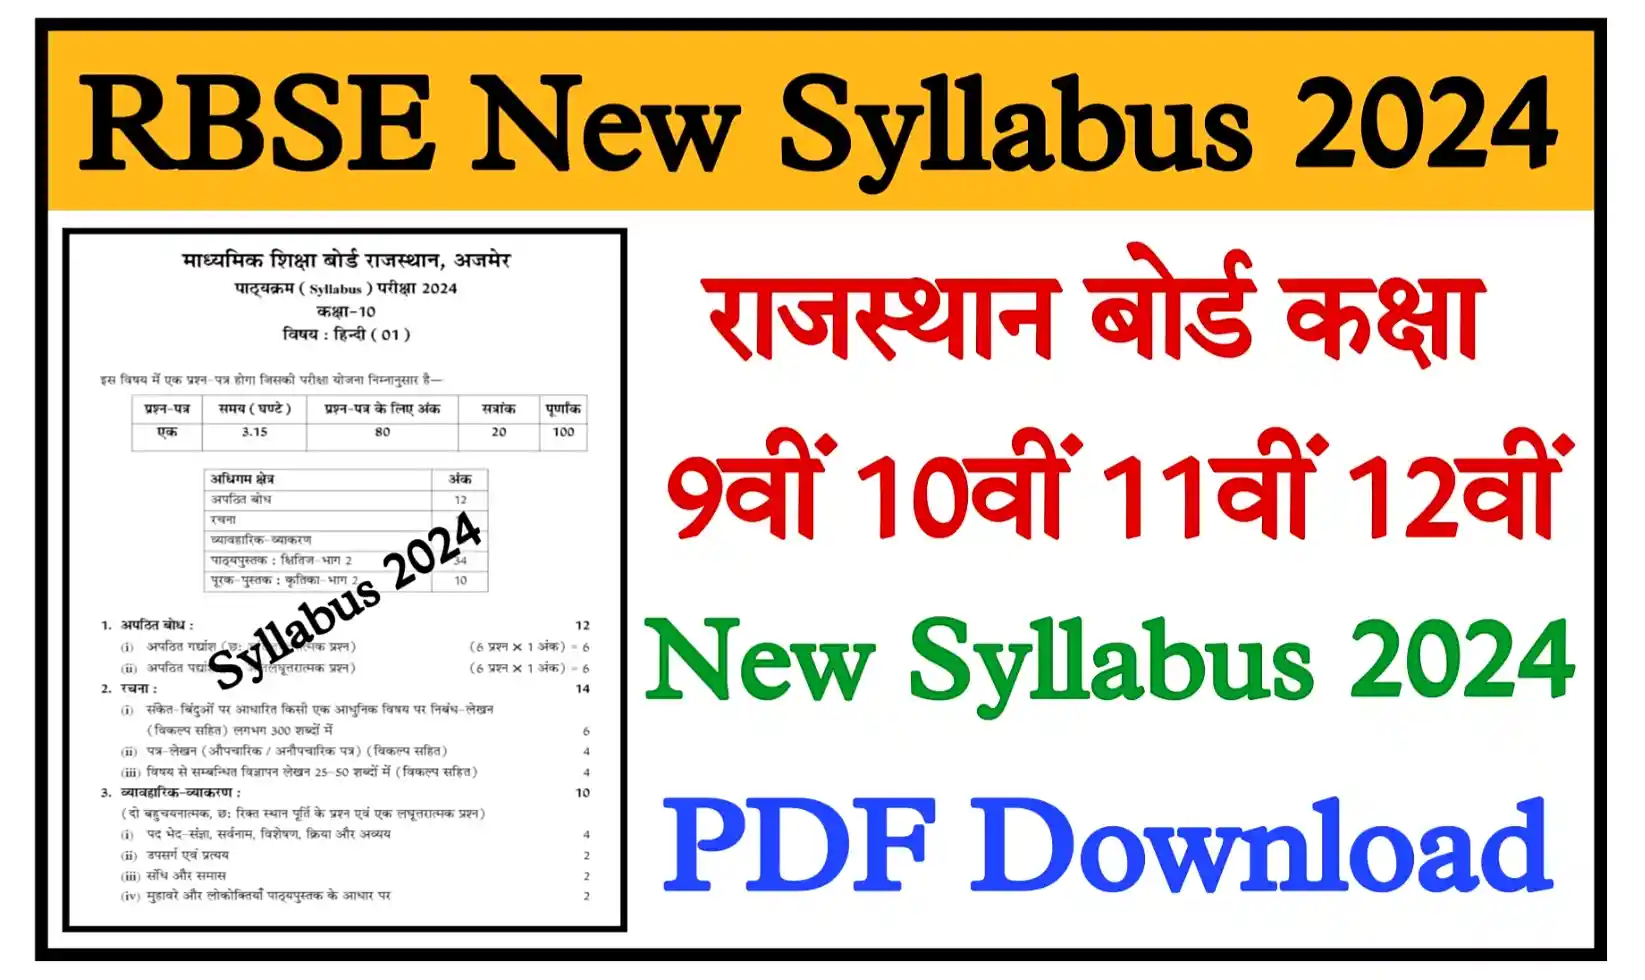 RBSE New Syllabus 2024 PDF Download In Hindi, Rajasthan Board 9th, 10th, 11th, 12th Syllabus Download Link